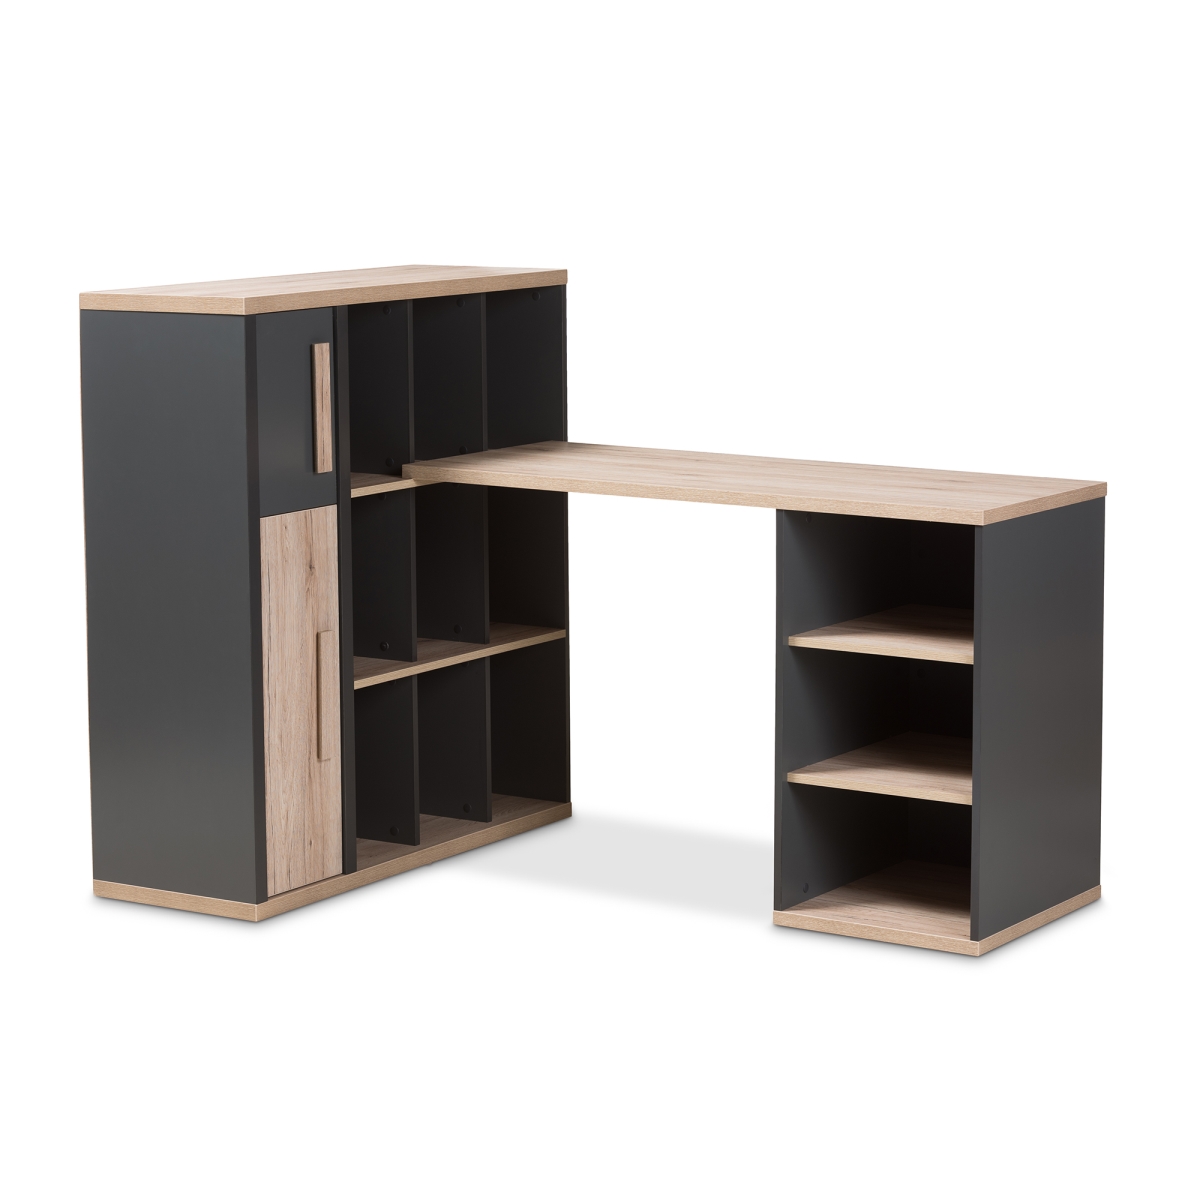 Wt970010-dark Grey-white Oak Pandora Modern & Contemporary Dark Grey & Light Brown Two - Tone Study Desk With Built-in Shelving Unit